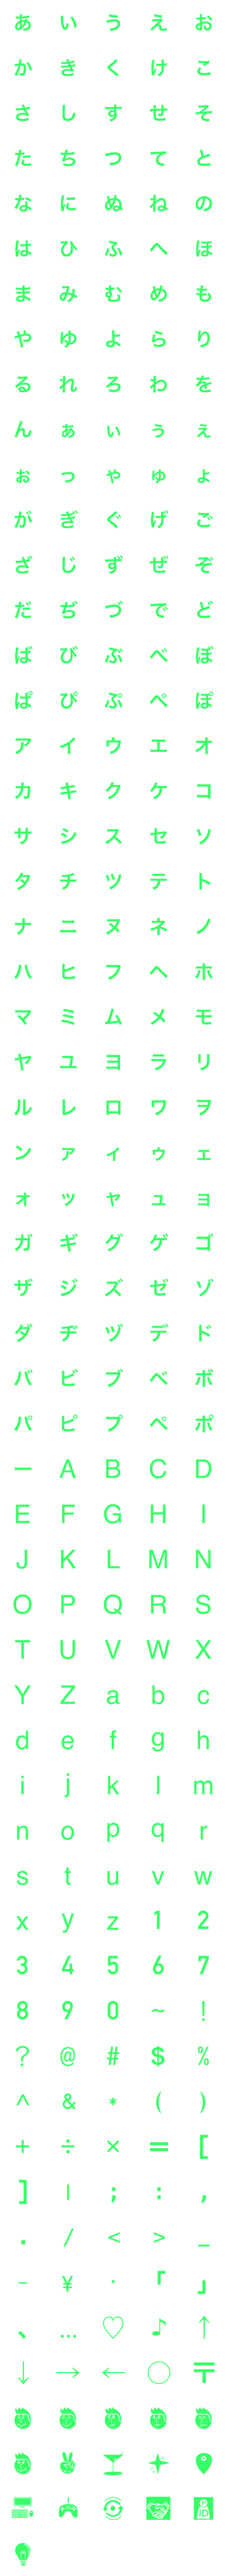 Line絵文字 Japanese Language Abc 281種類 1円